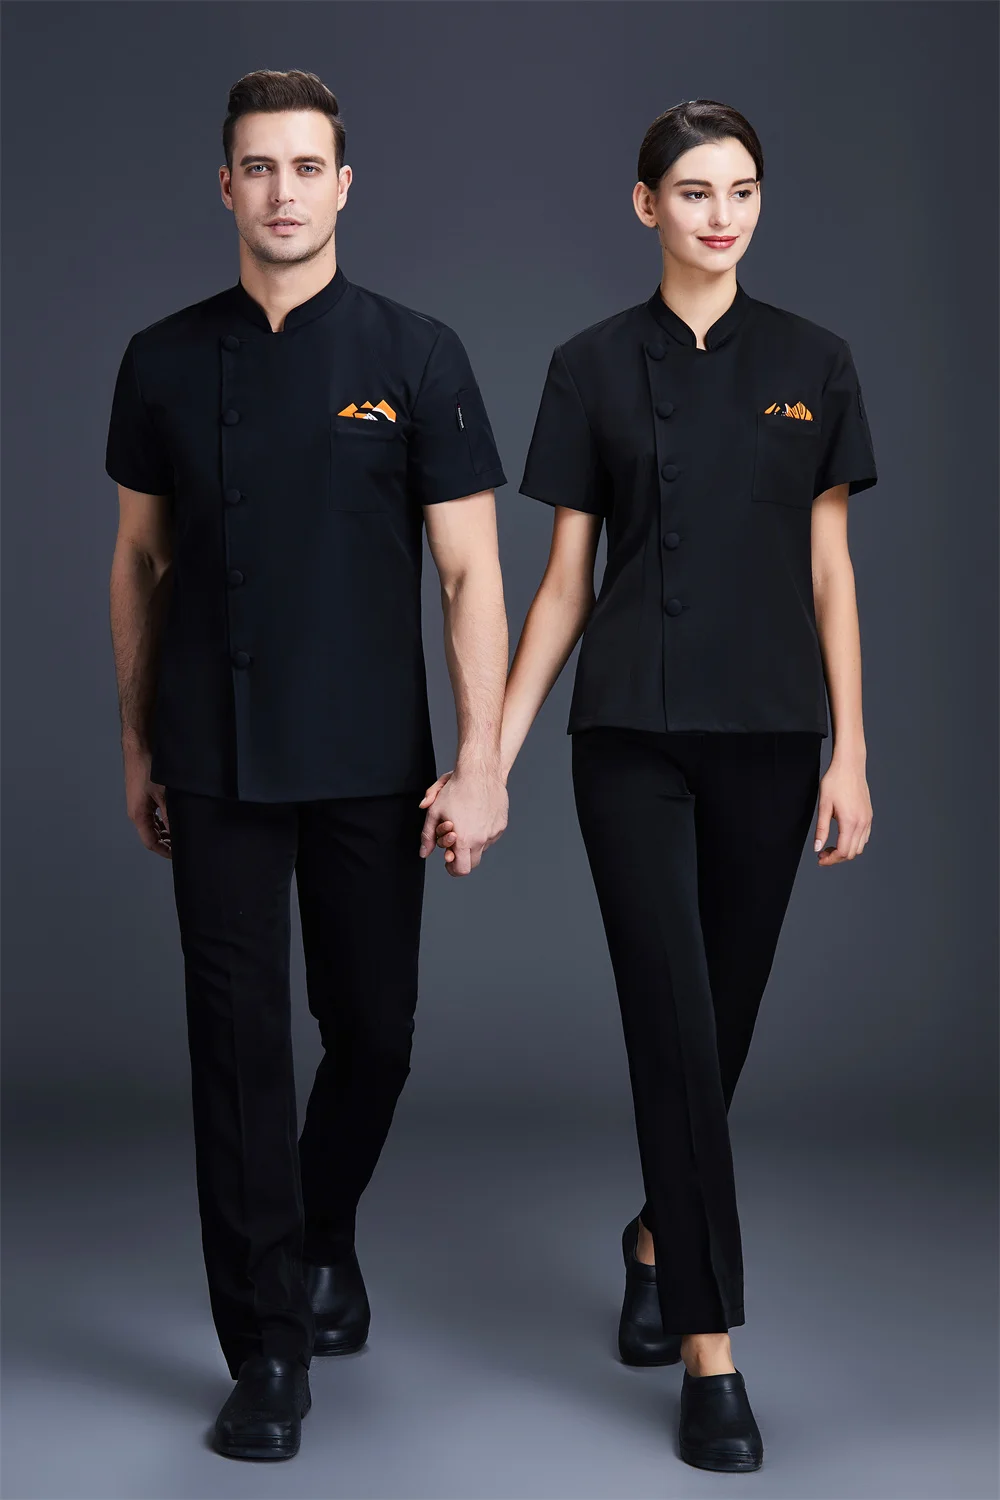 Hot Sale Accept Customized Logo Wear-Resistant 2020-27 Single row cloth buckle Unisex Chef Uniform